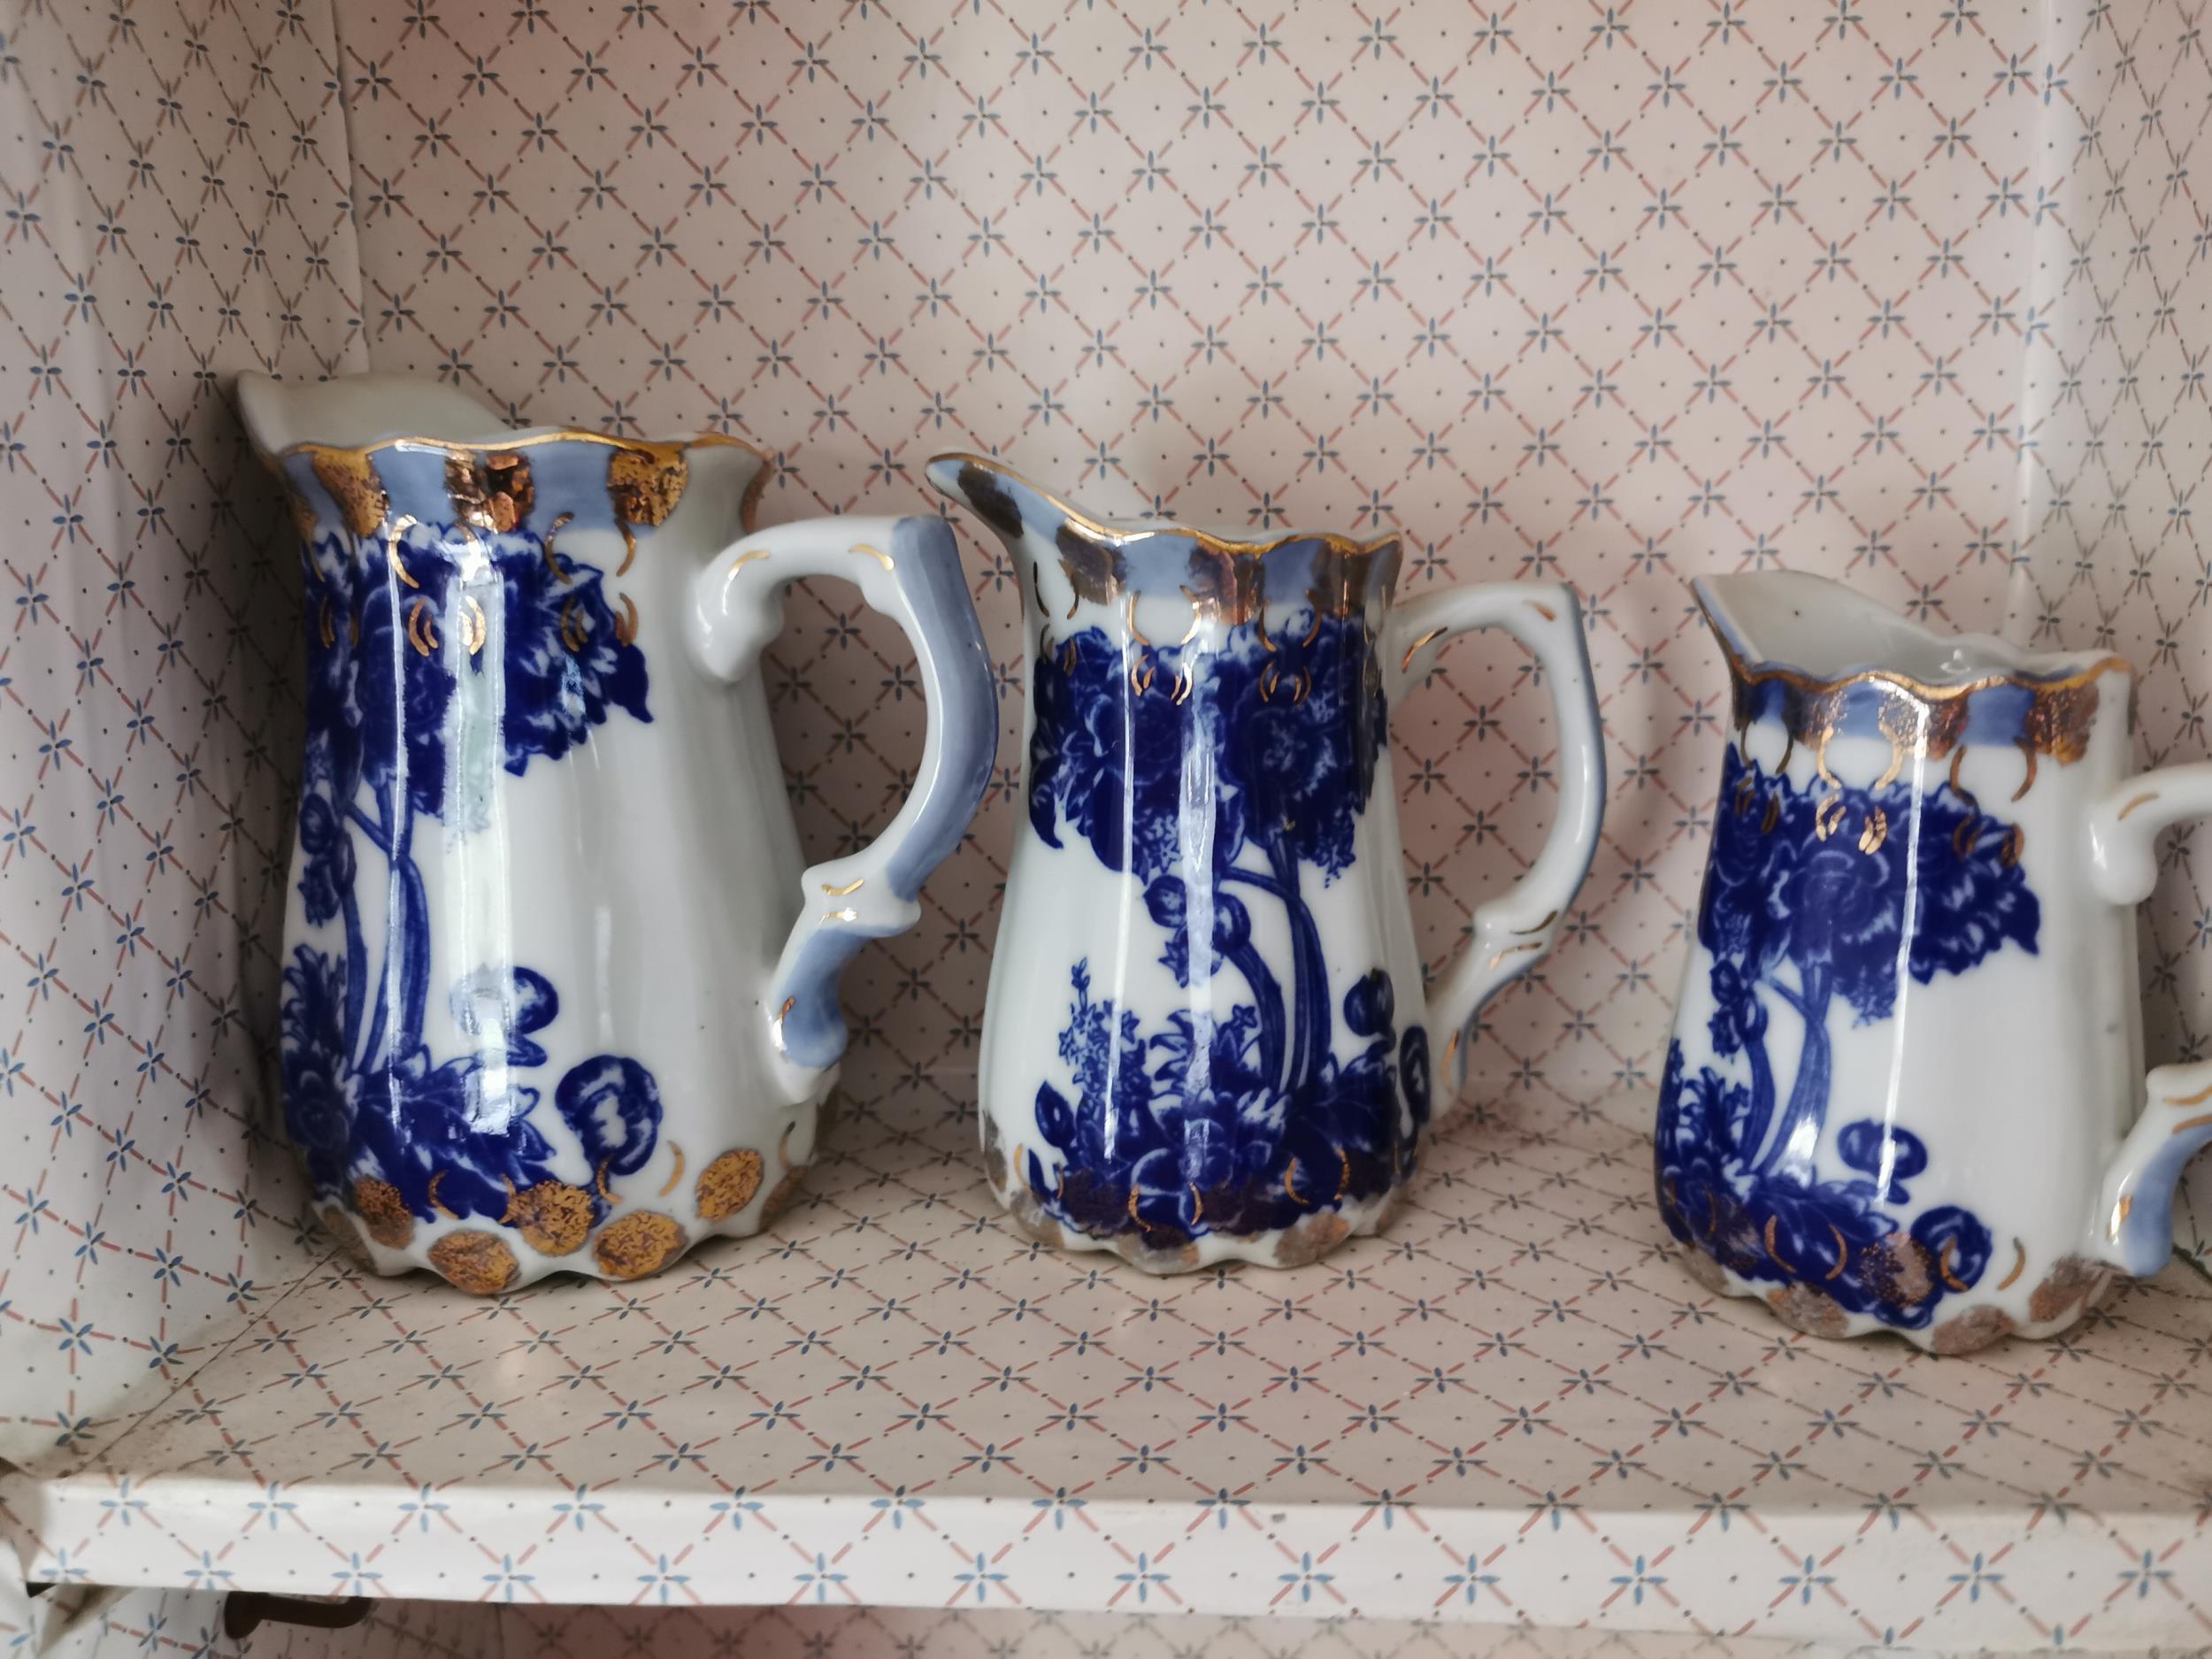 Set of five graduated blue and white ceramic jugs { 21cm H X 14cm Dia - 11cm H X 9cm Dia }. - Image 2 of 4